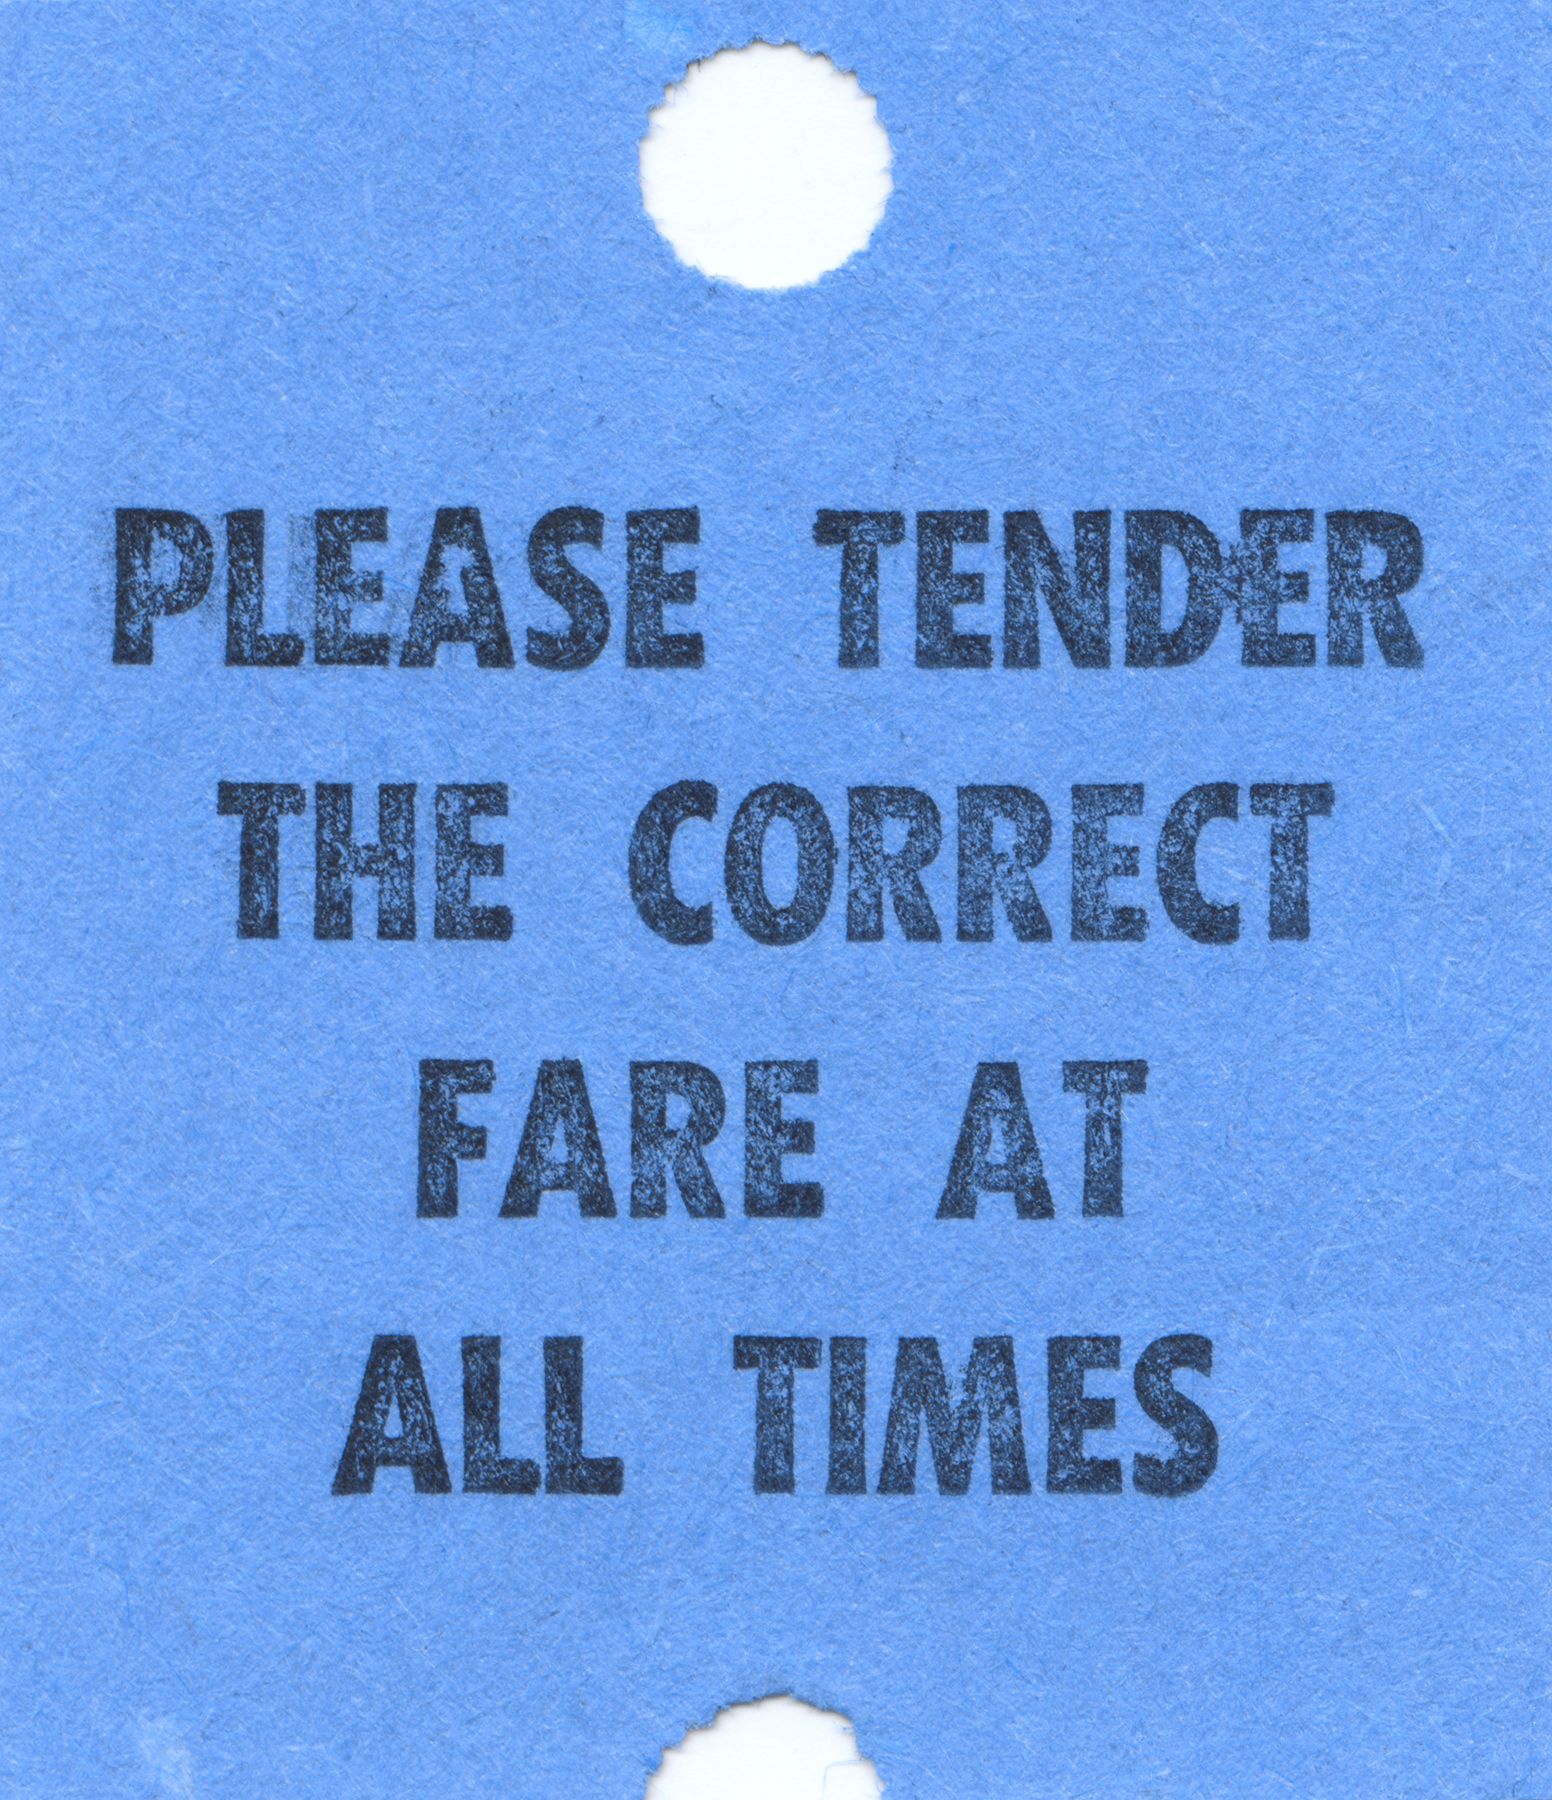 Vintage fare ticket - blue photo